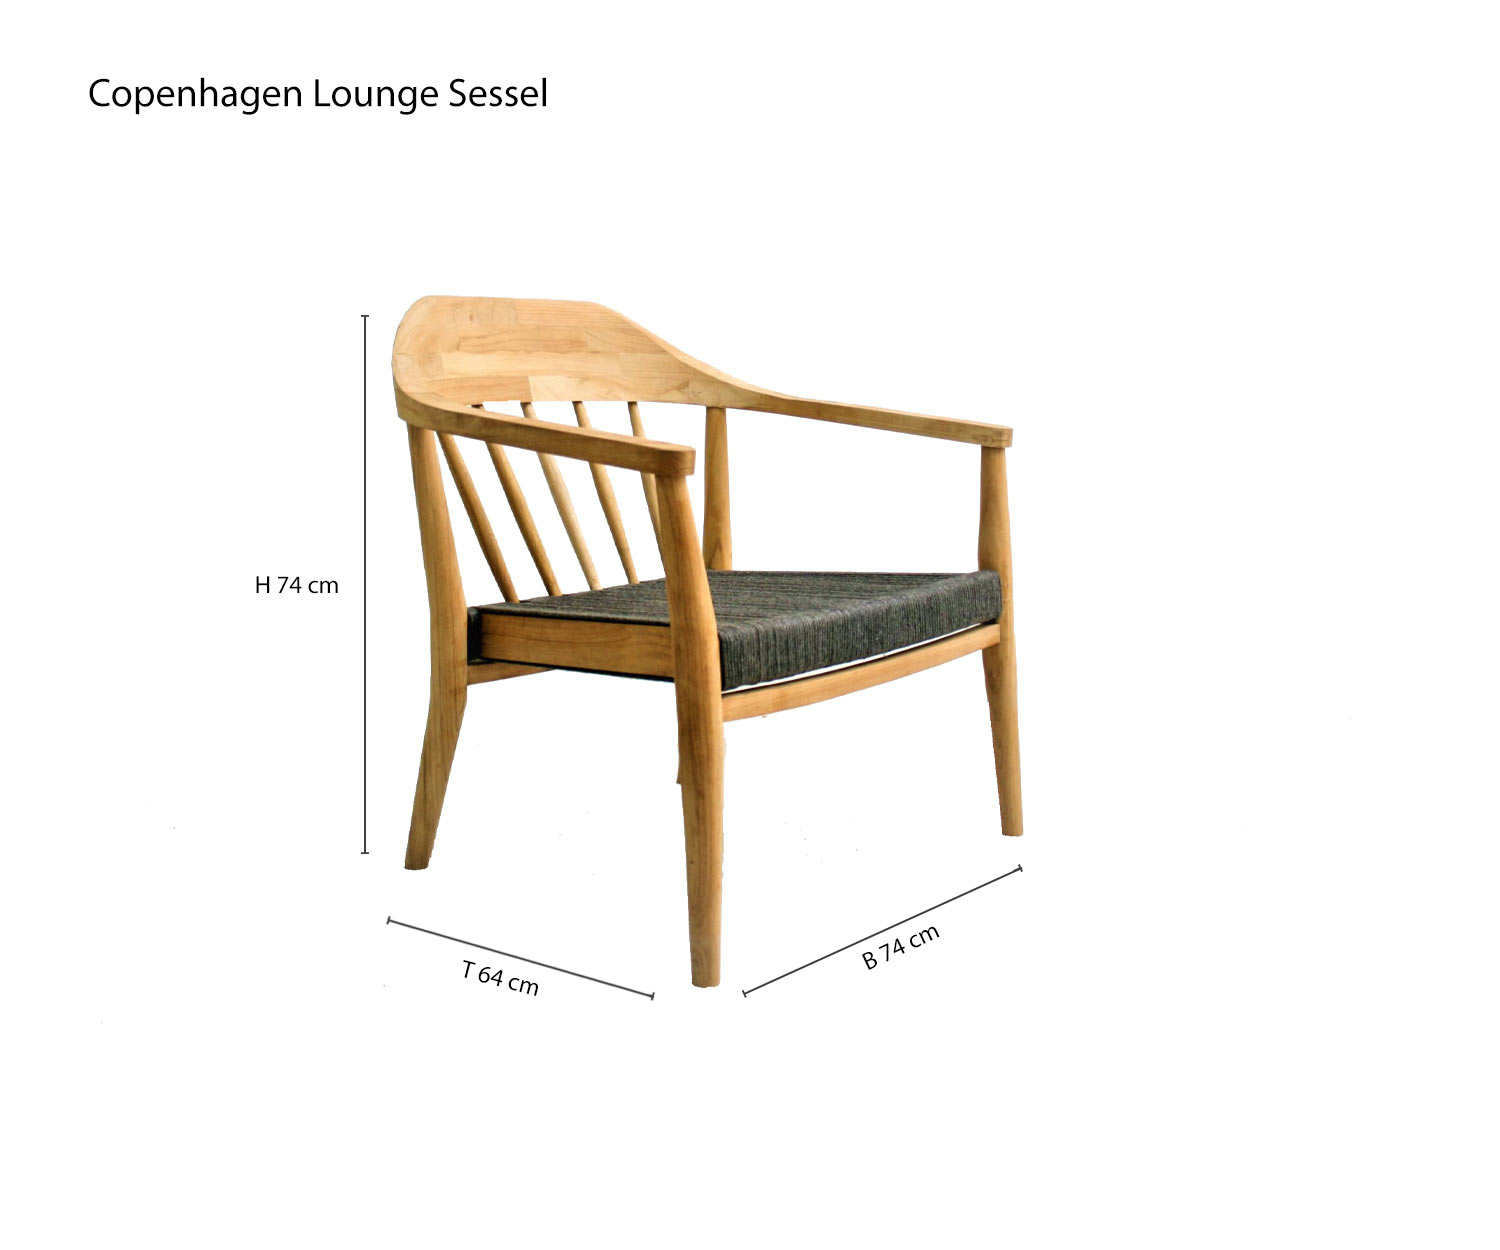 Oasiq Copenaghen lounge chair sketch dimensioni dimensioni dimensioni